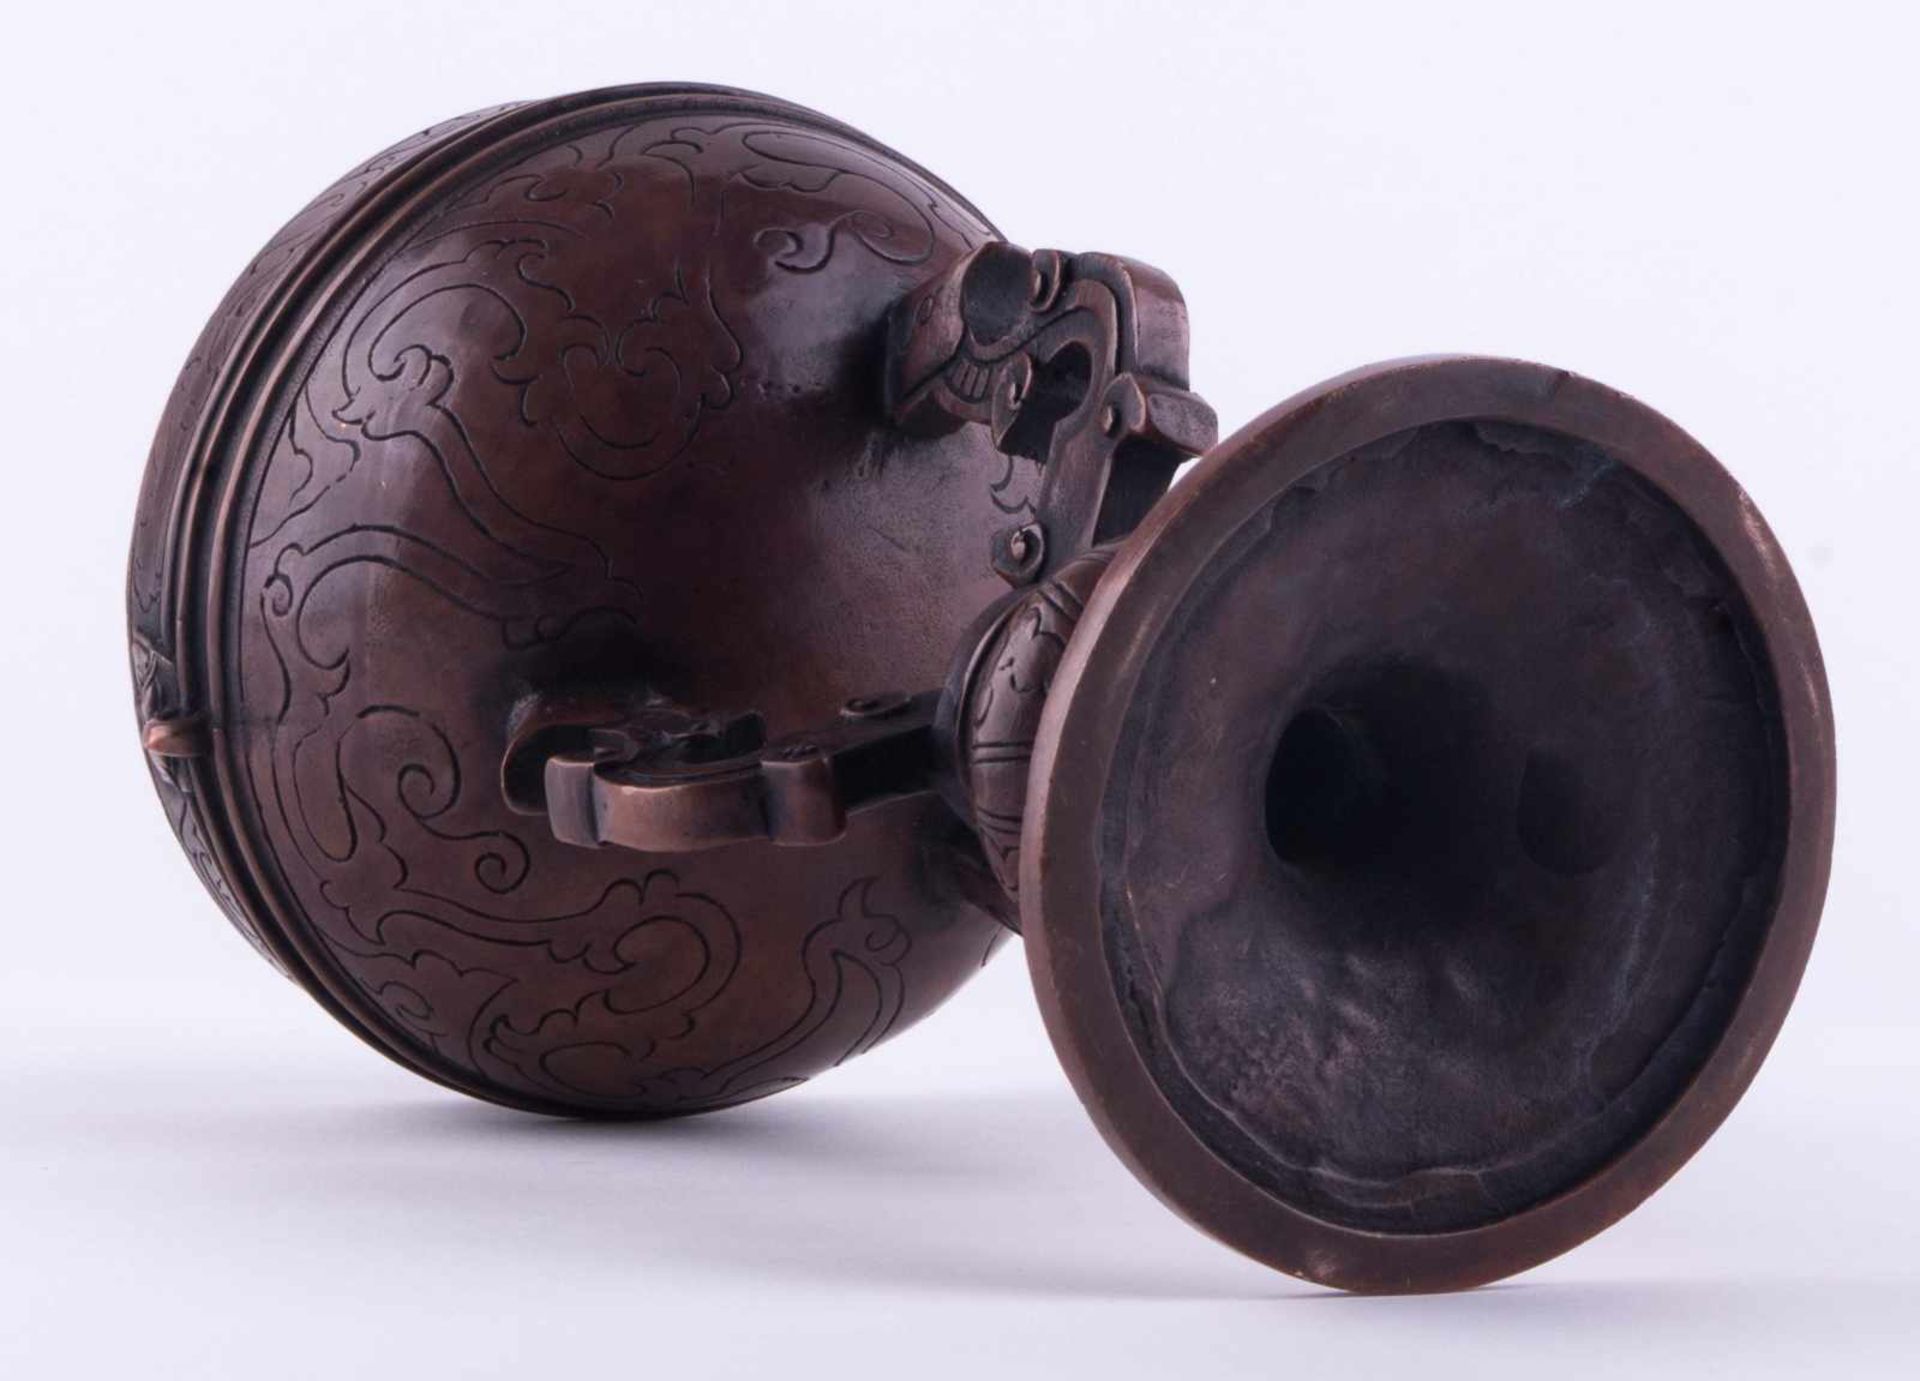 Weihrauchbrenner China 19. Jhd. / Incense burner, China 19th century Bronze, H: 22 cm - Image 4 of 4